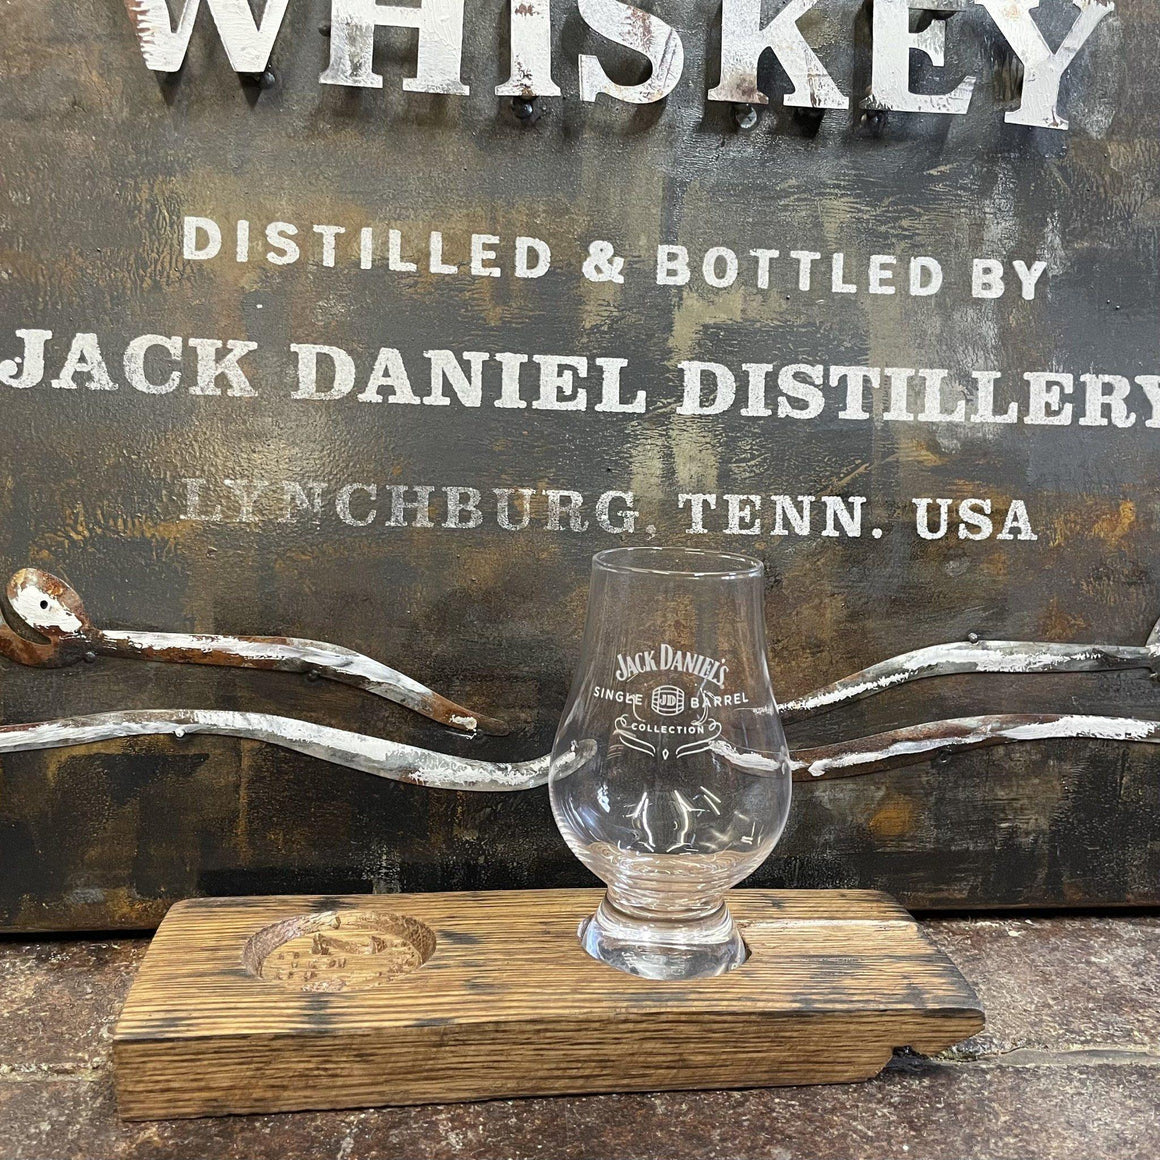 Jack Daniel’s Barrel Stave Cigar Holder and Single Barrel Glass - The Whiskey Cave